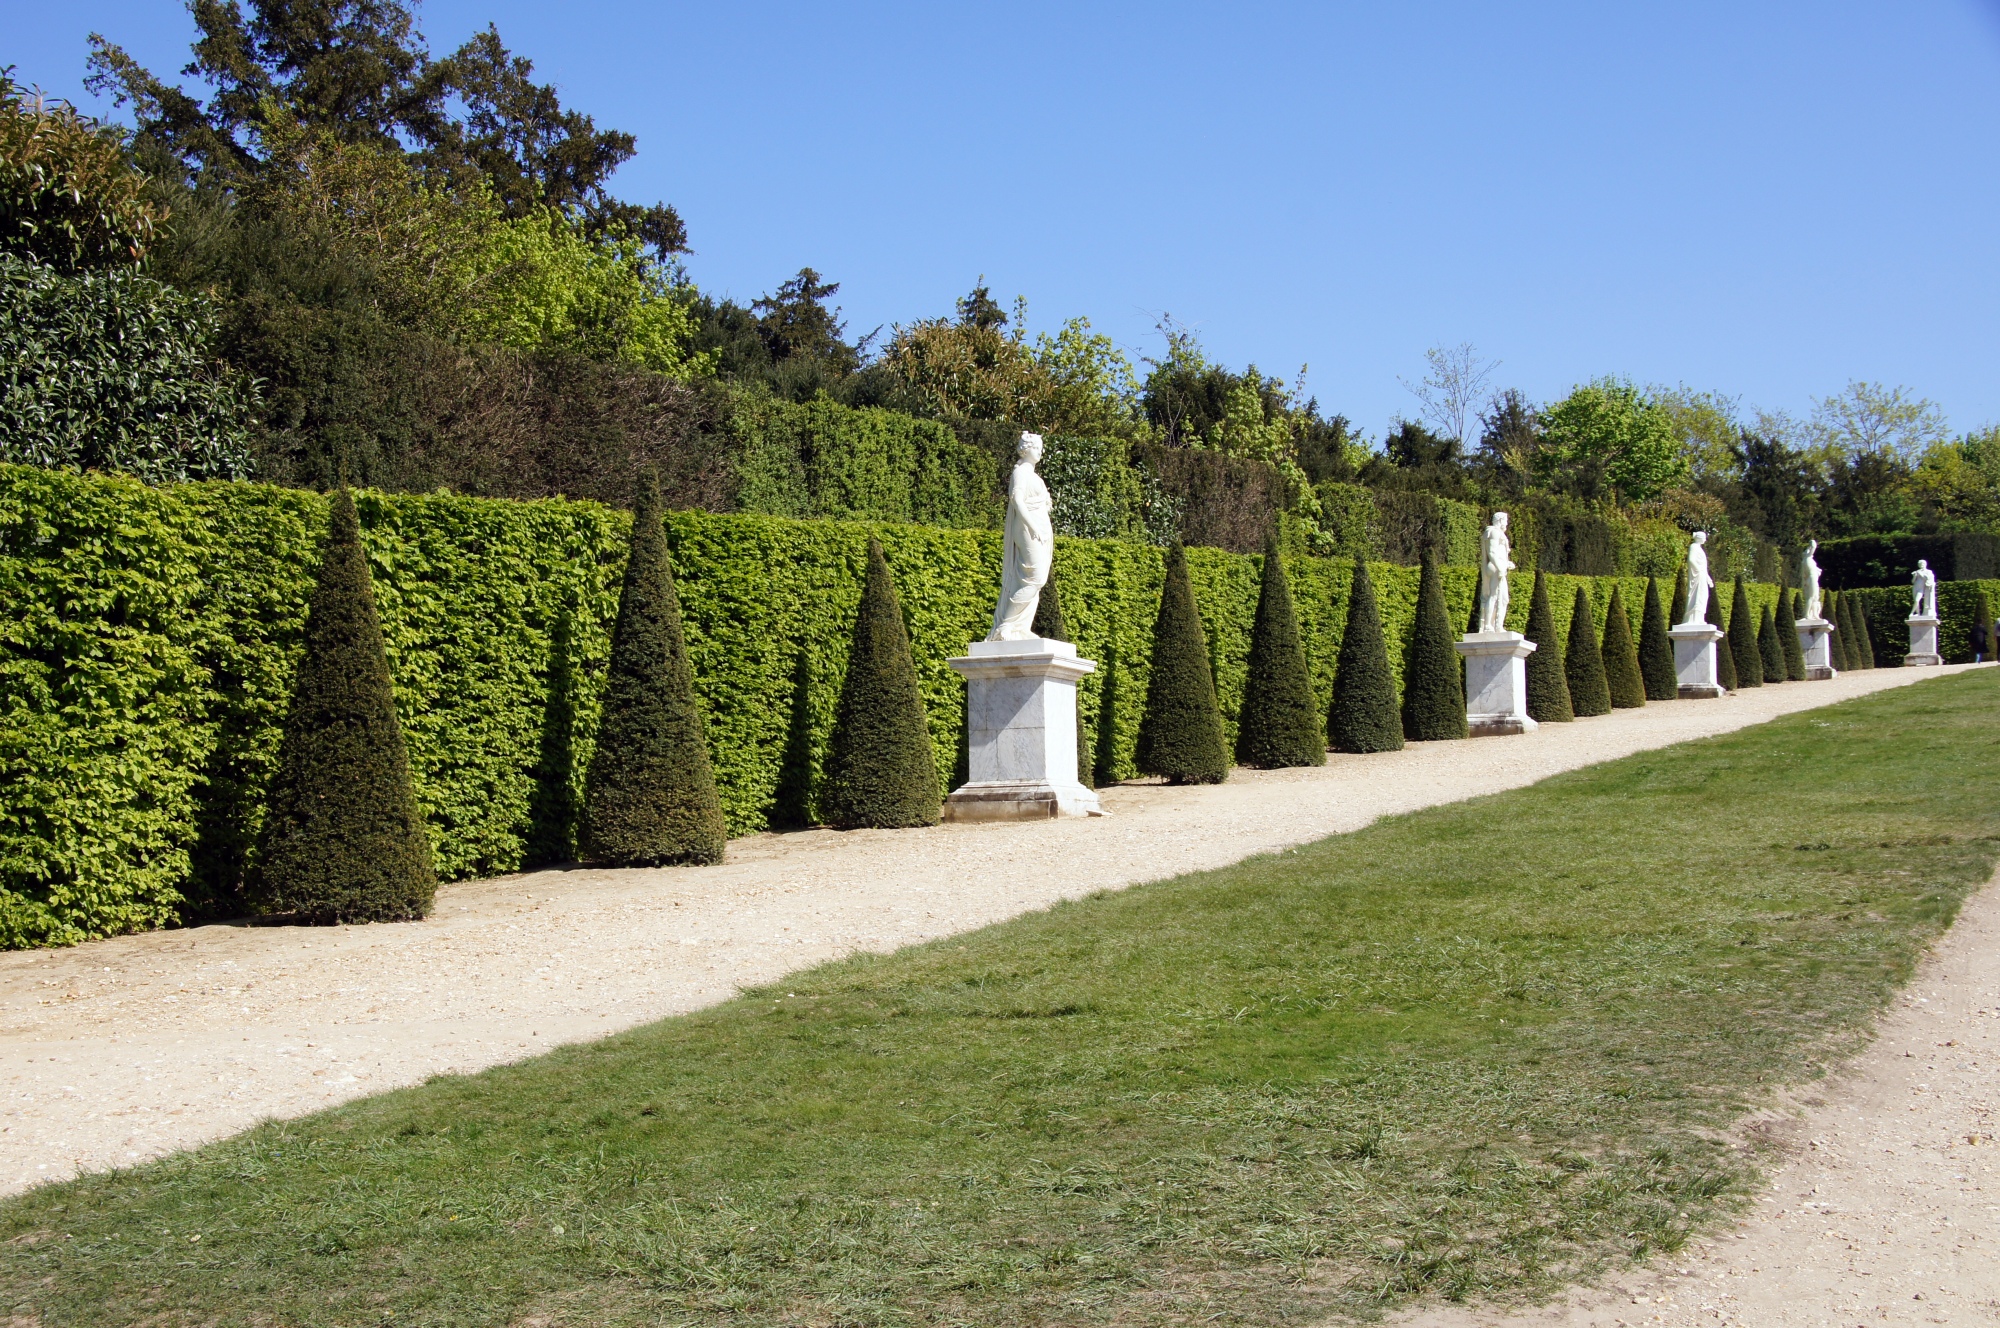 The Gardens of Versailles